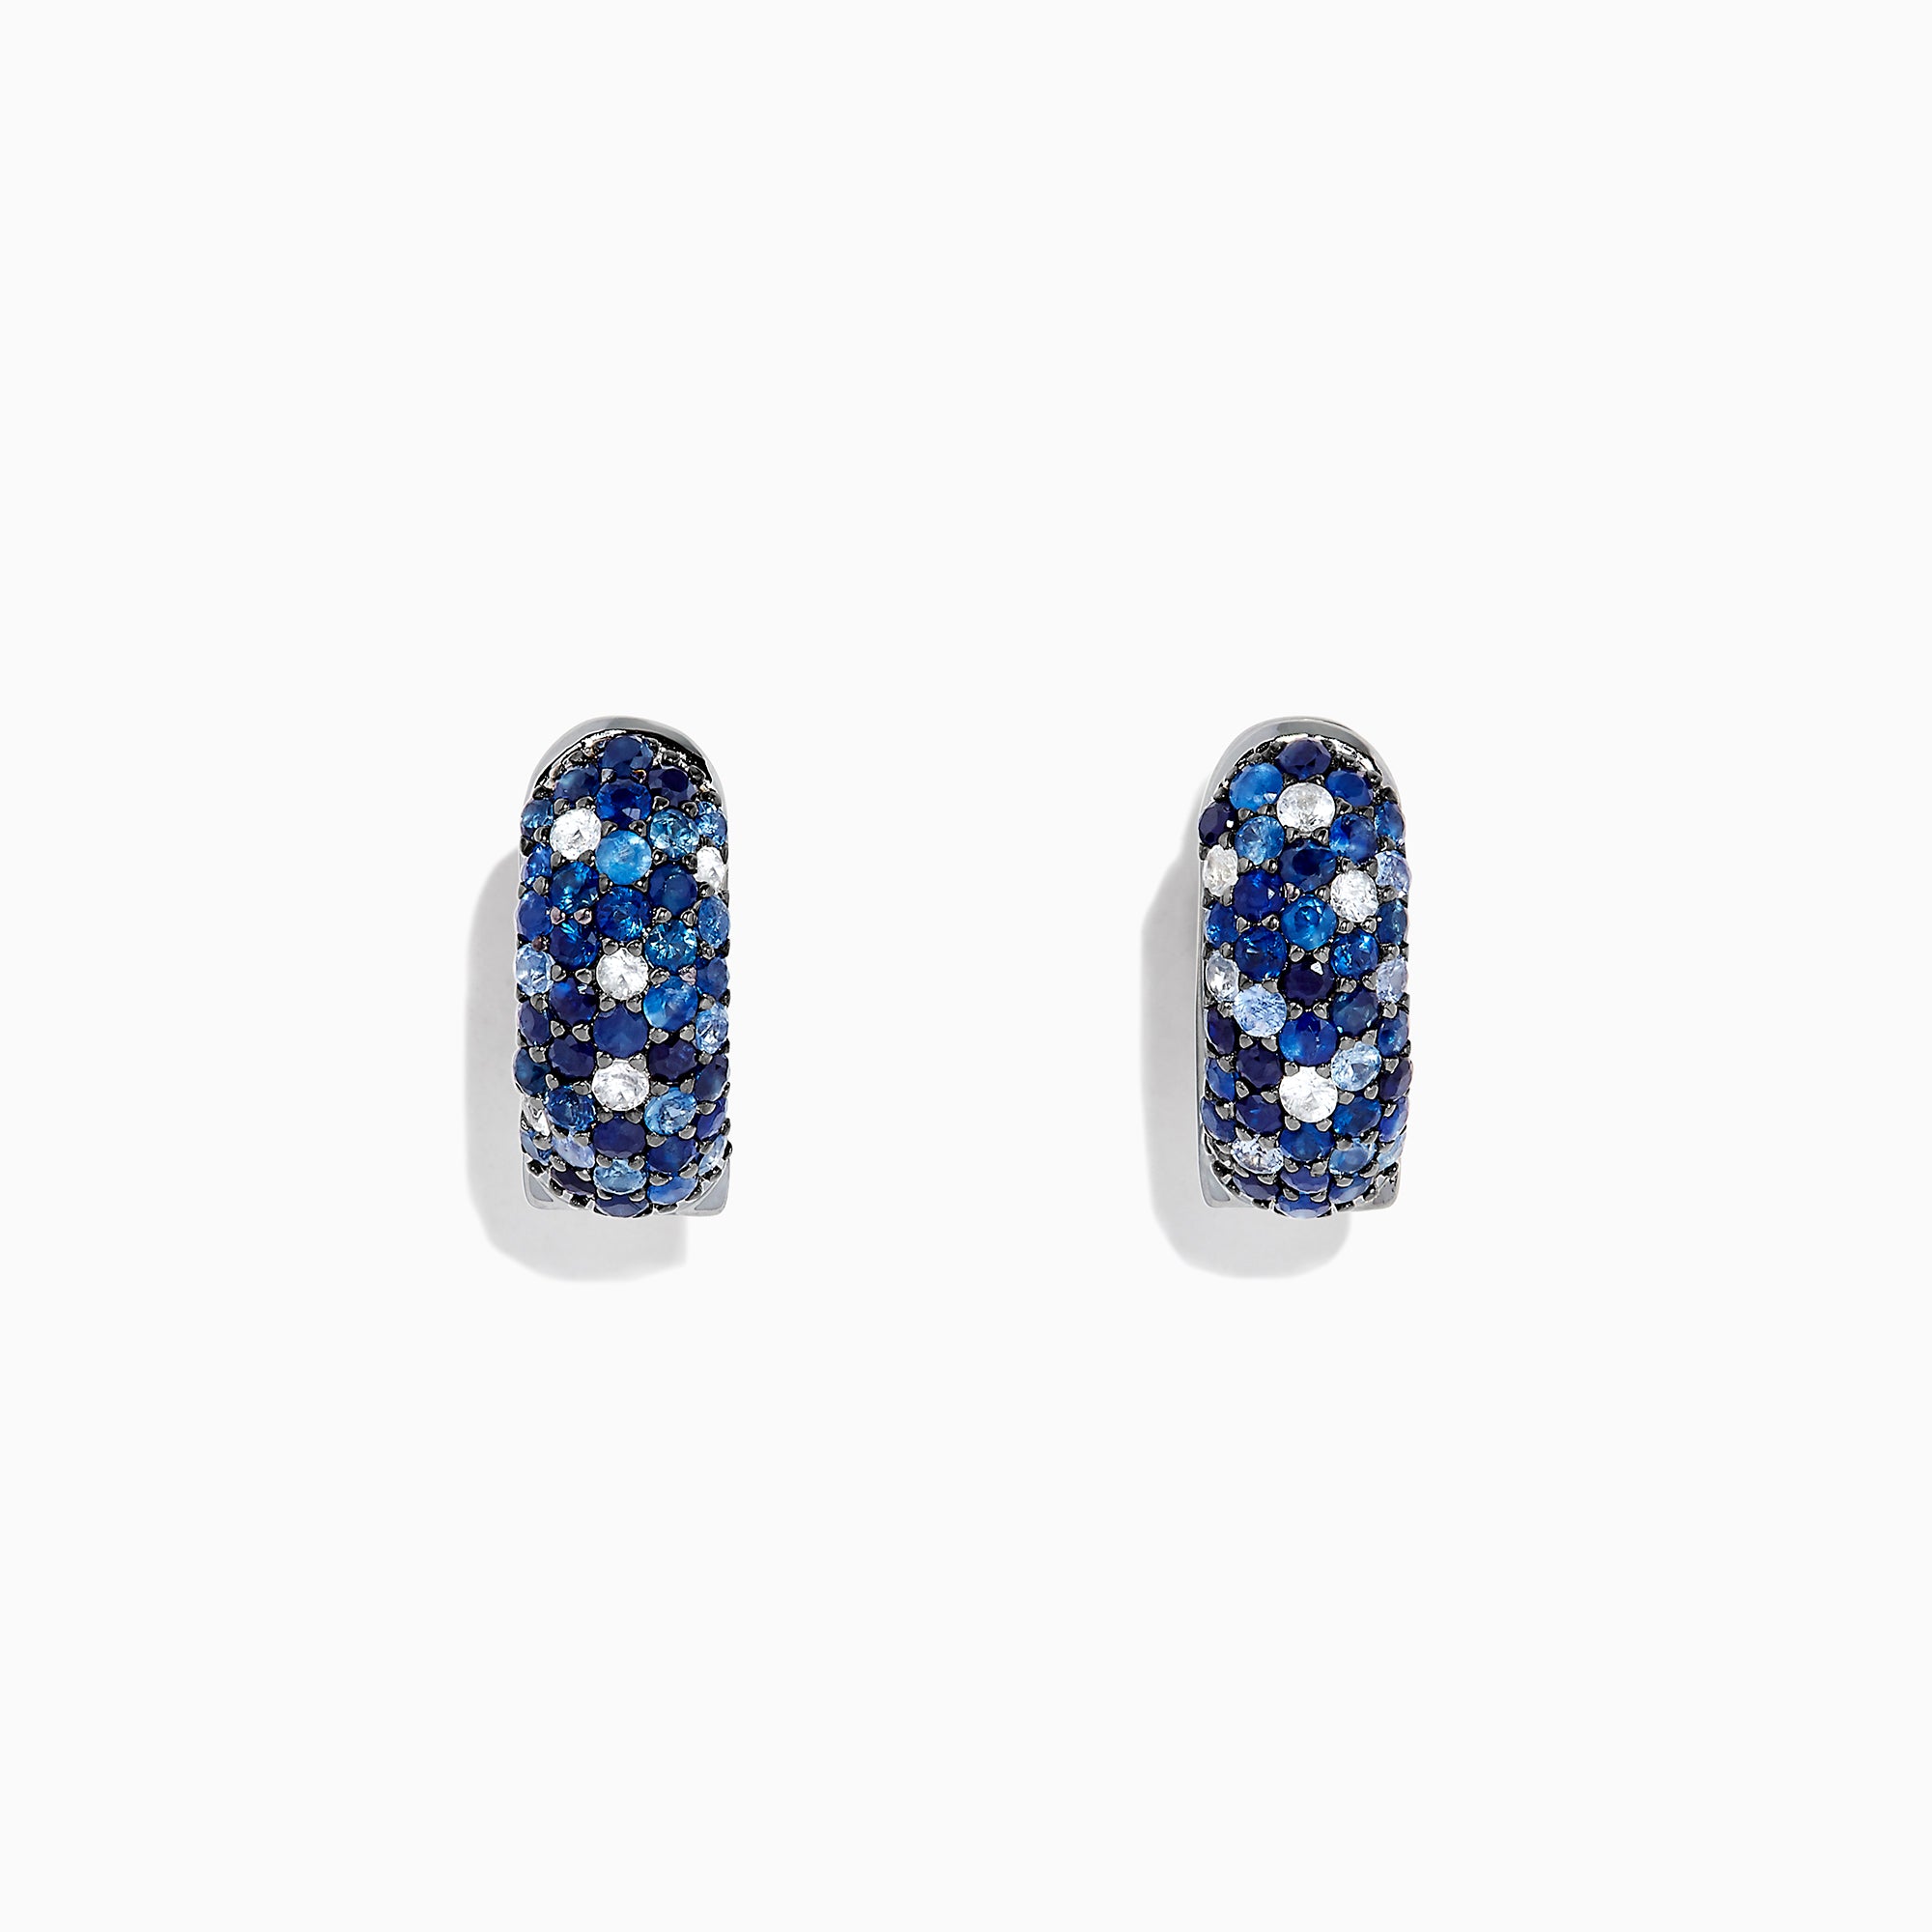 Effy 925 Sterling Silver Blue and White Sapphire Splash Earrings, 2.24 TCW